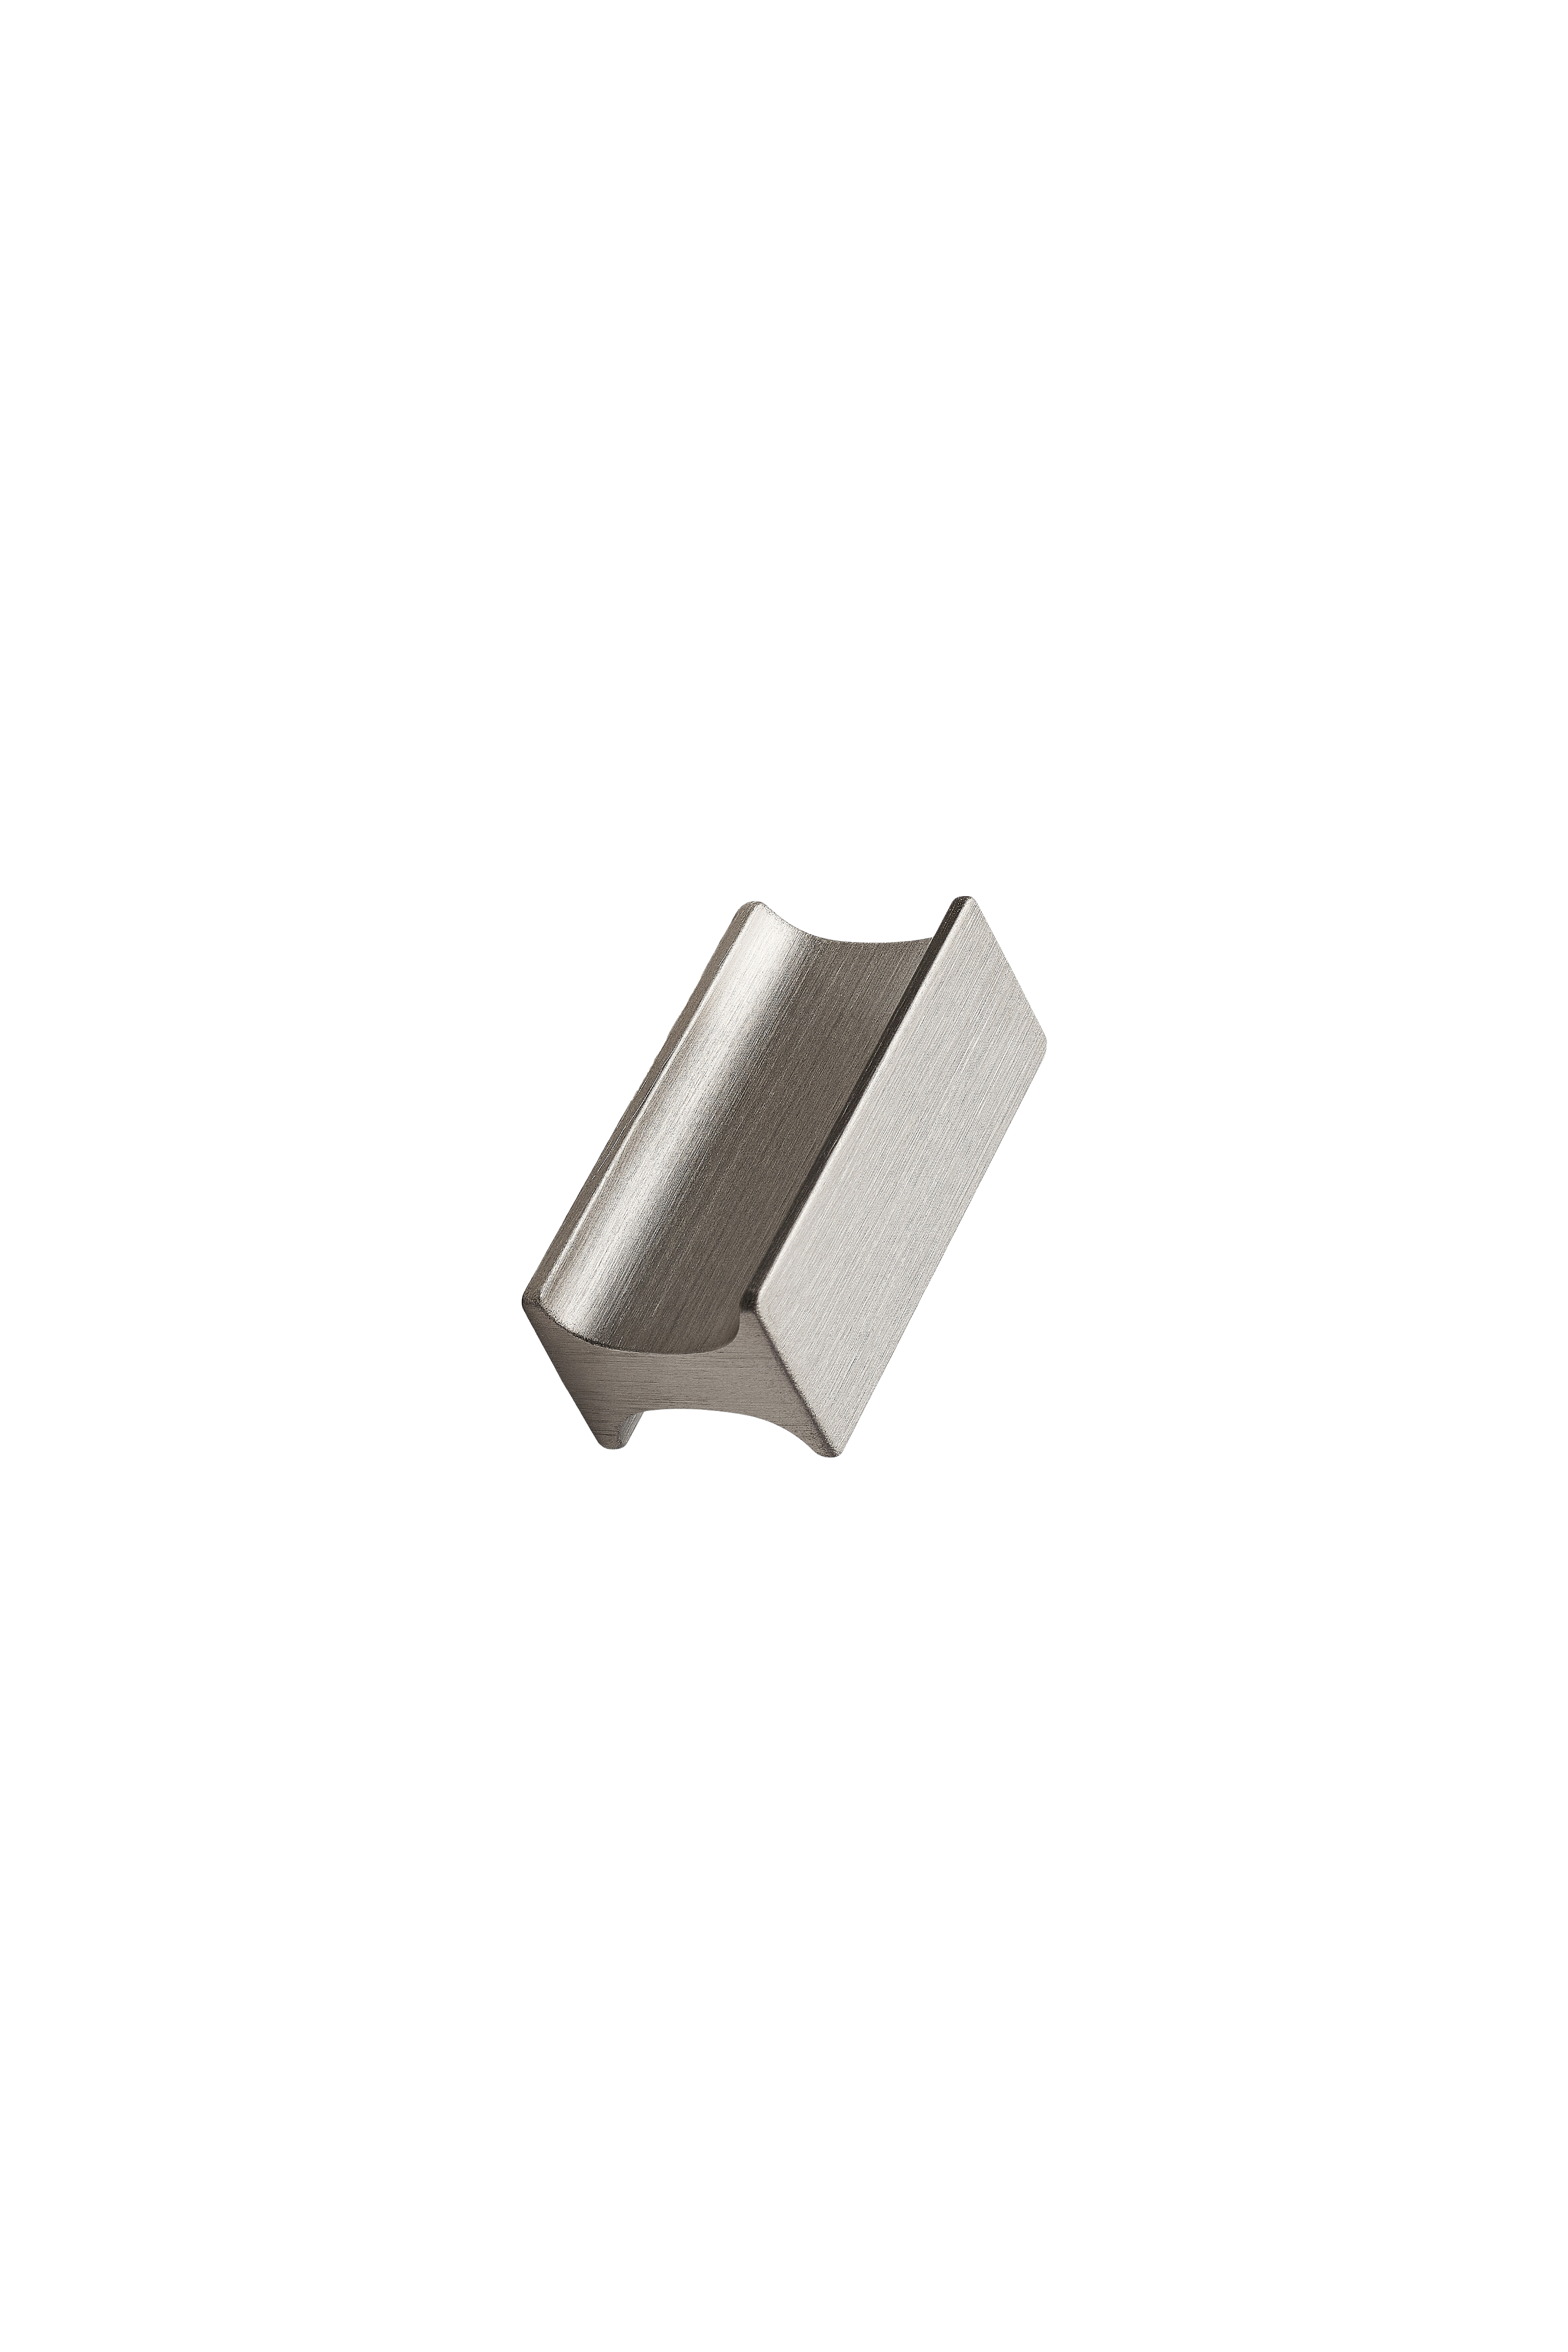 TRACK knop, aluminium, stål • Furnipart